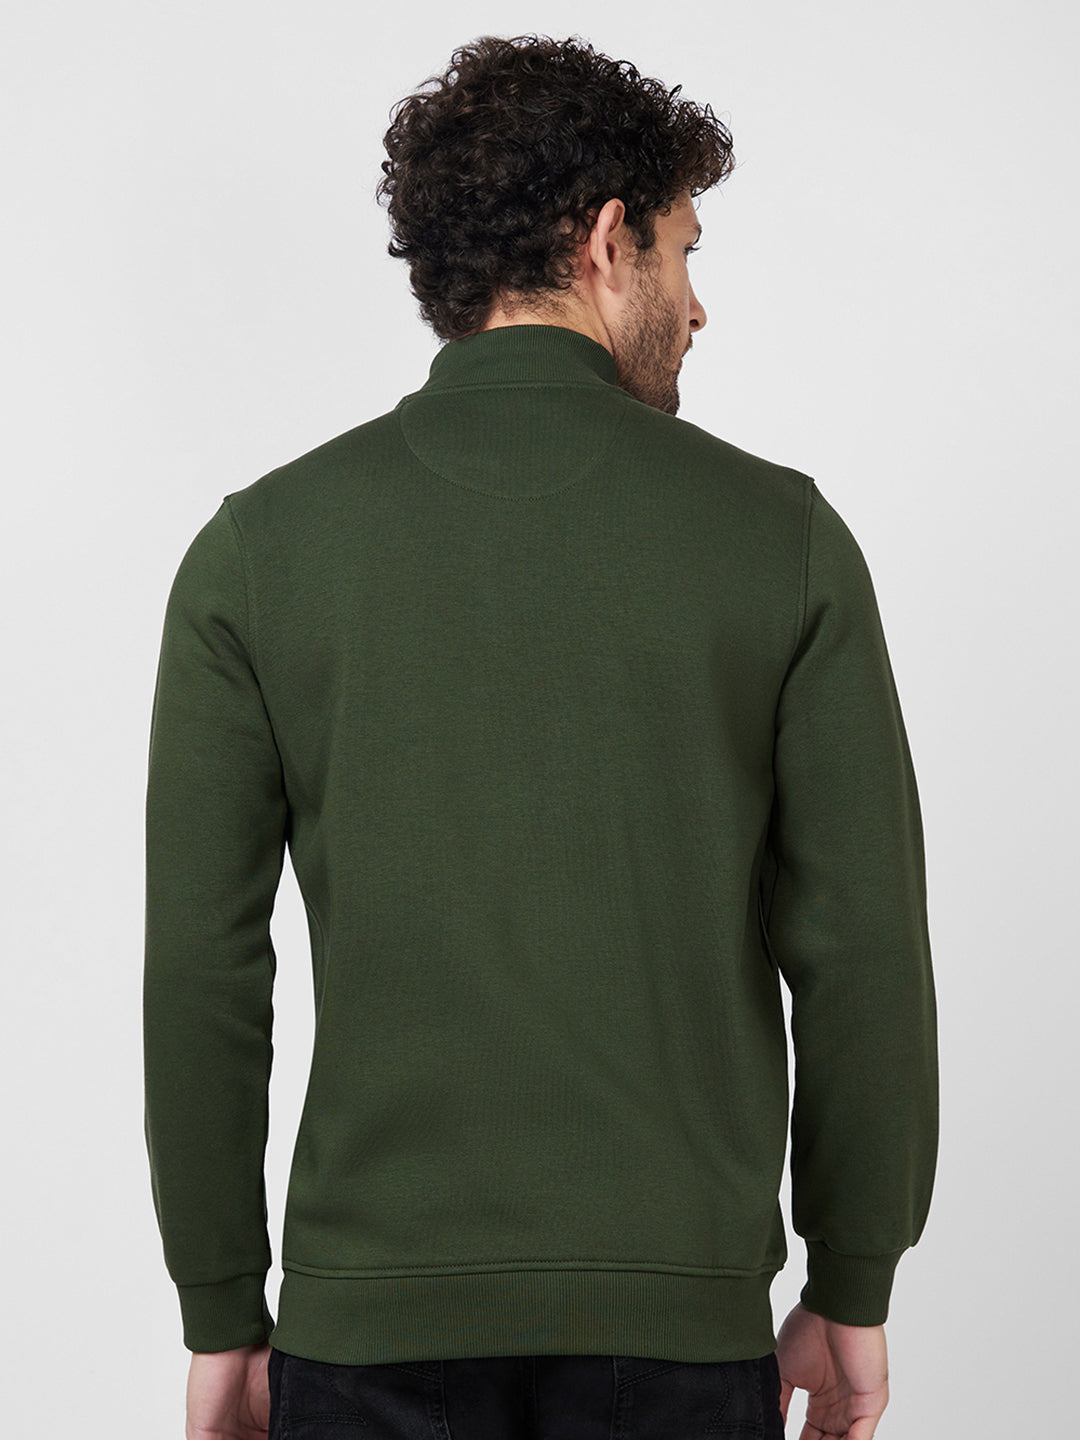 Spykar High Neck Full Sleeve Green Sweatshirt For Men